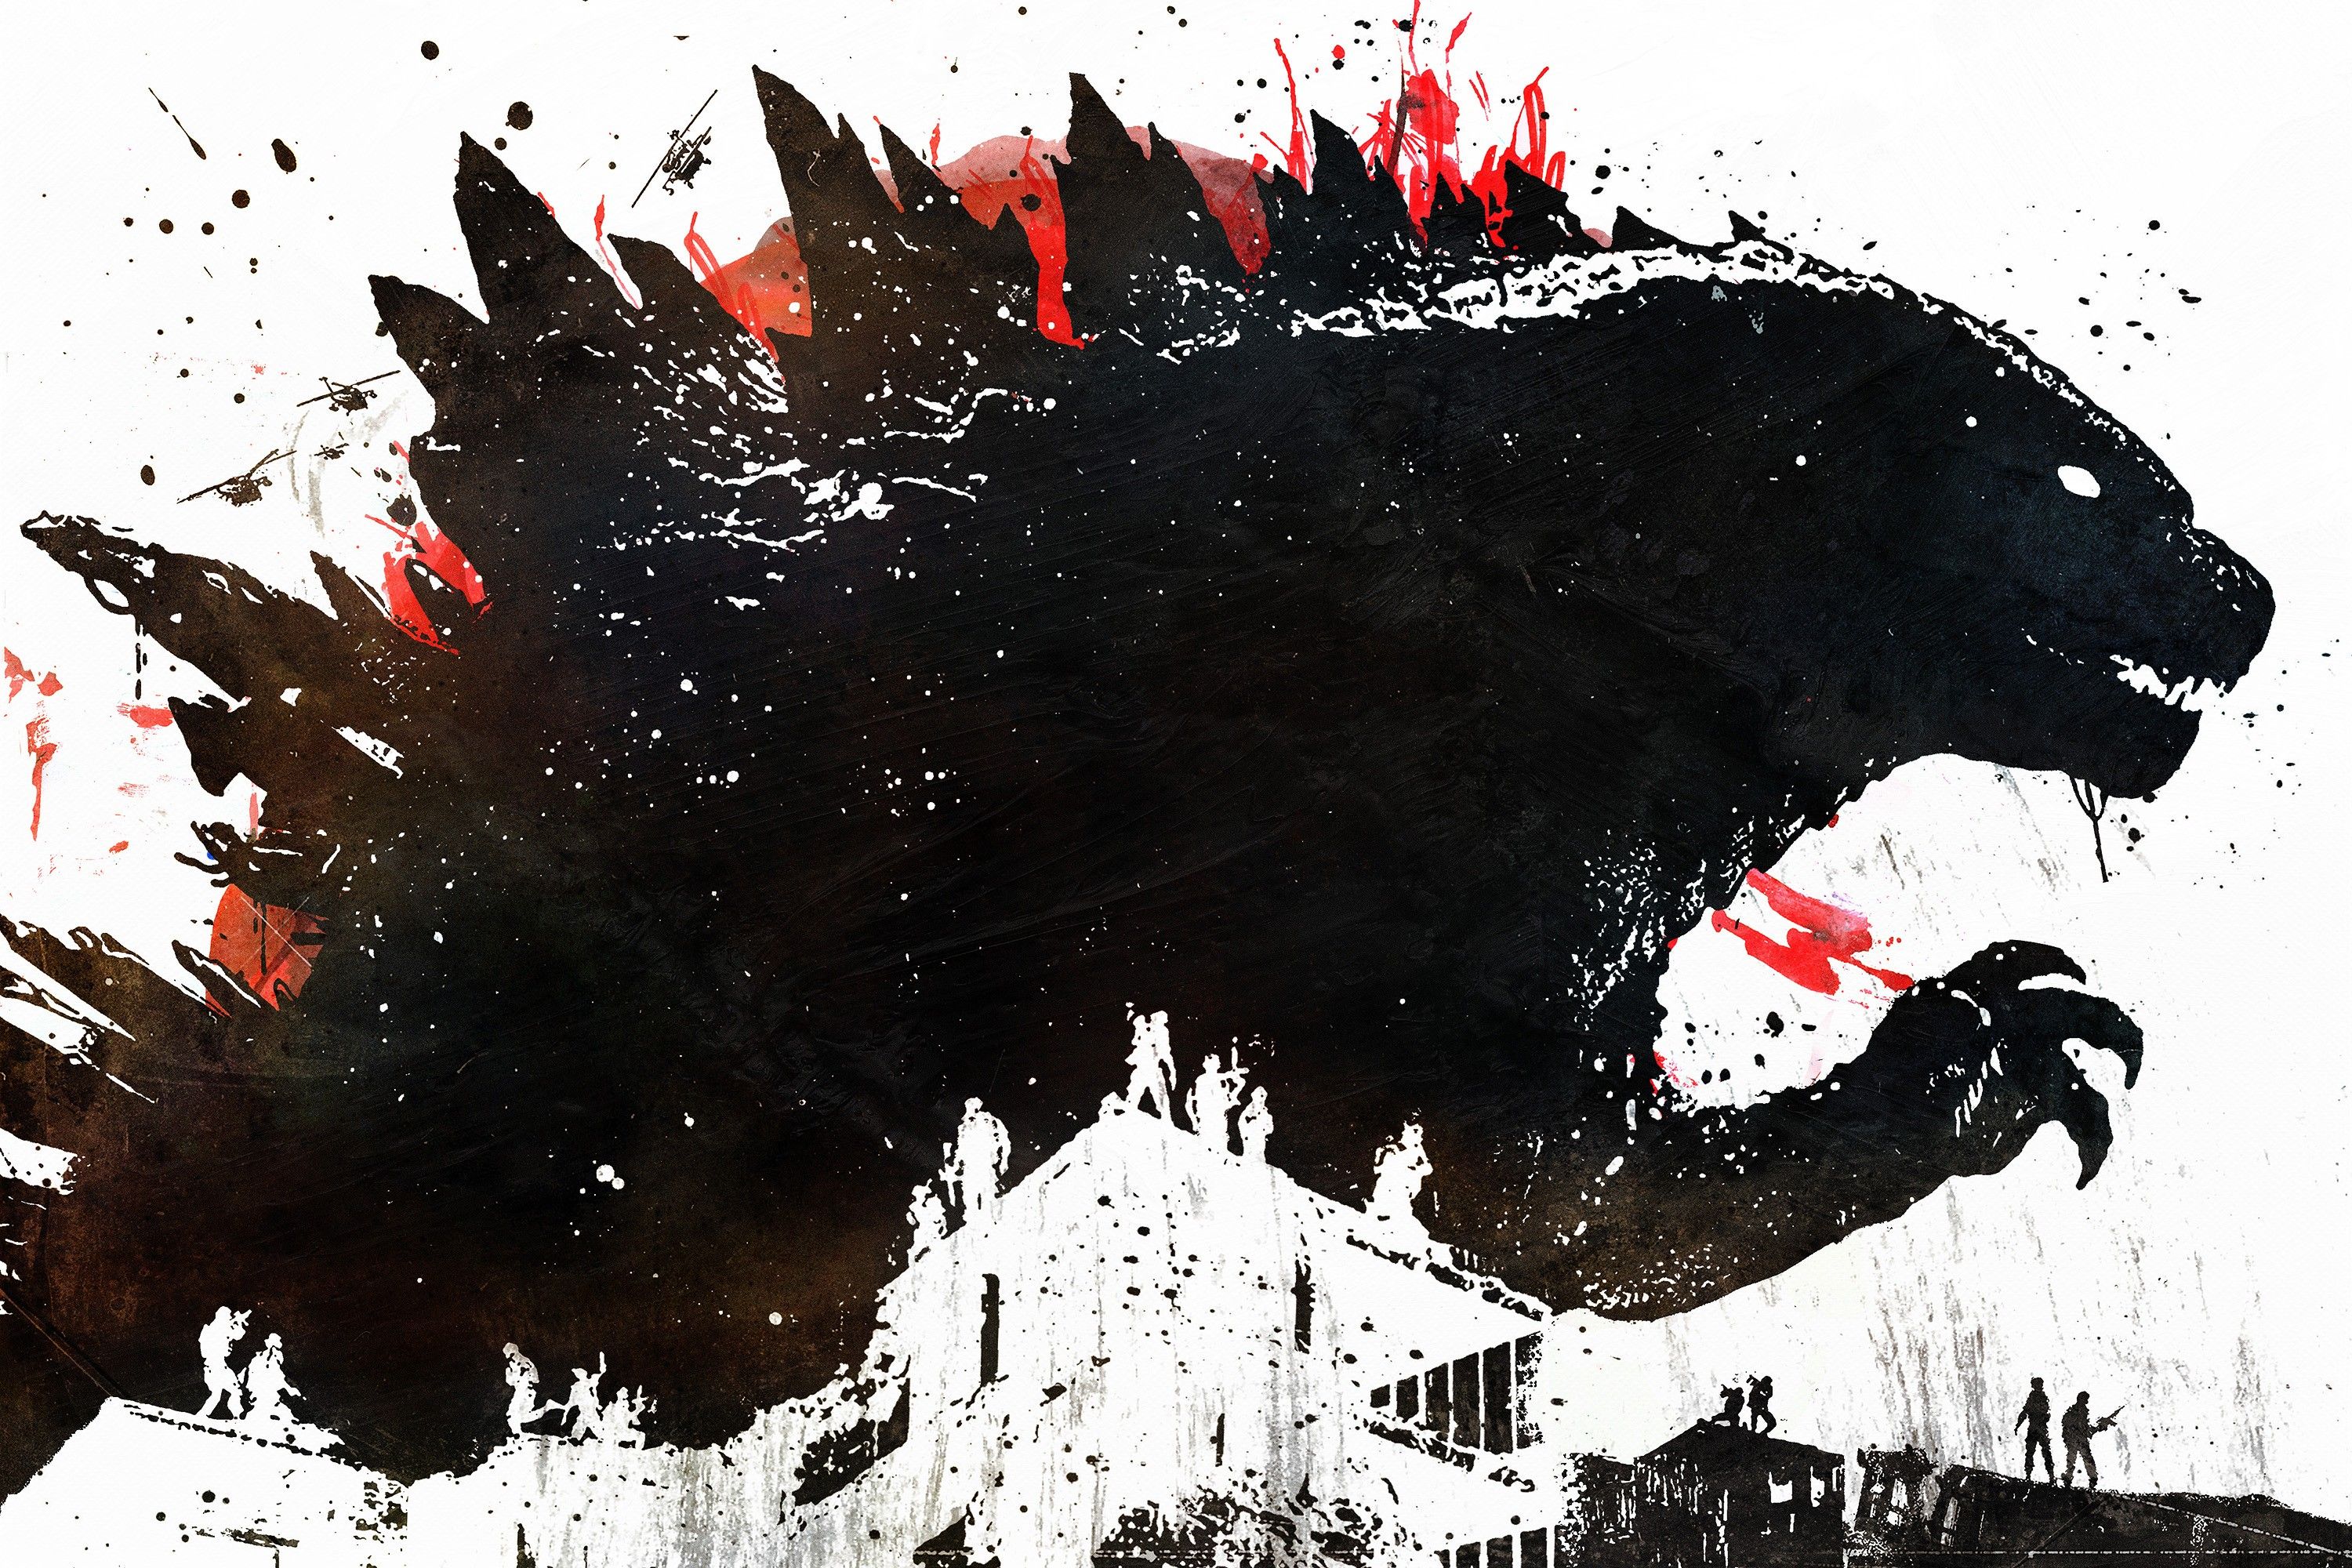 Godzilla wallpapers ·① Download free amazing High Resolution